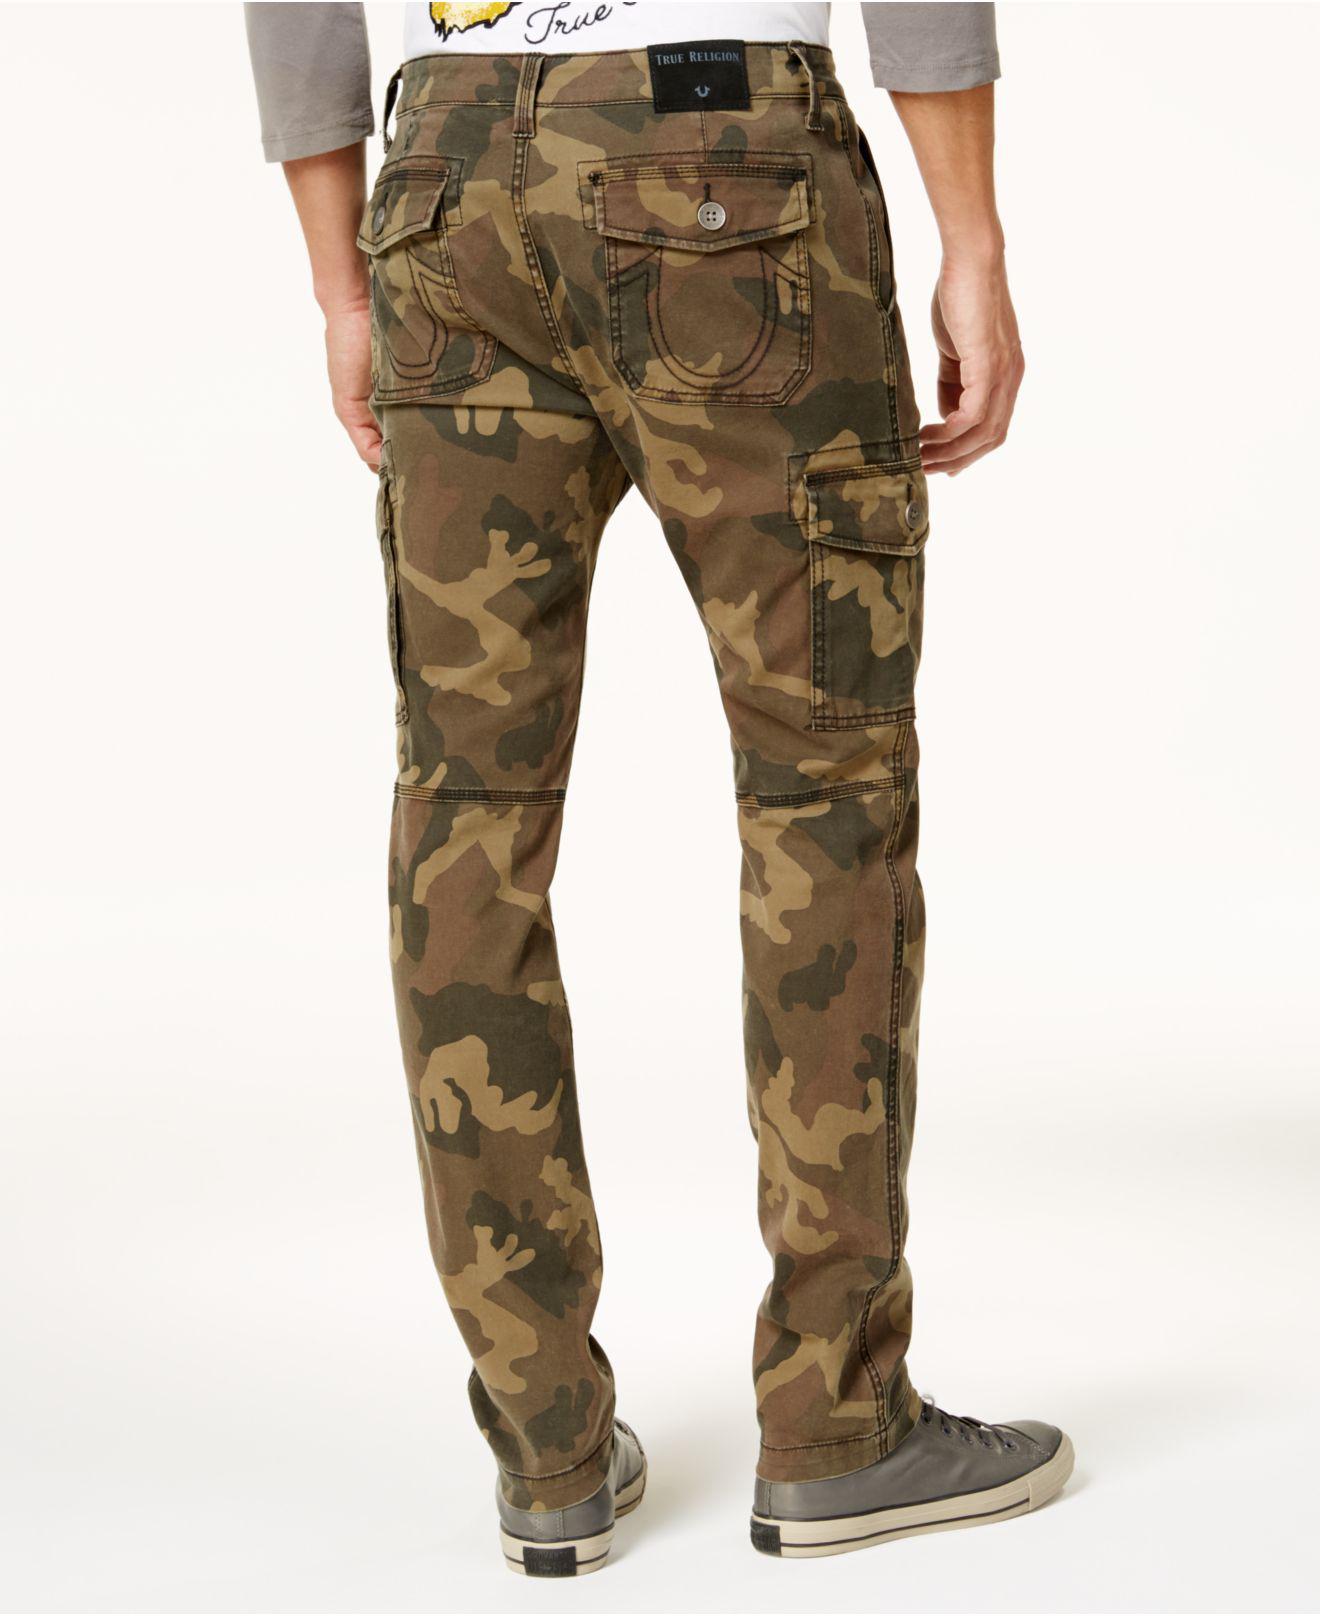 True Religion Denim Men's Slim-fit Cargo Pants in Green for Men - Lyst